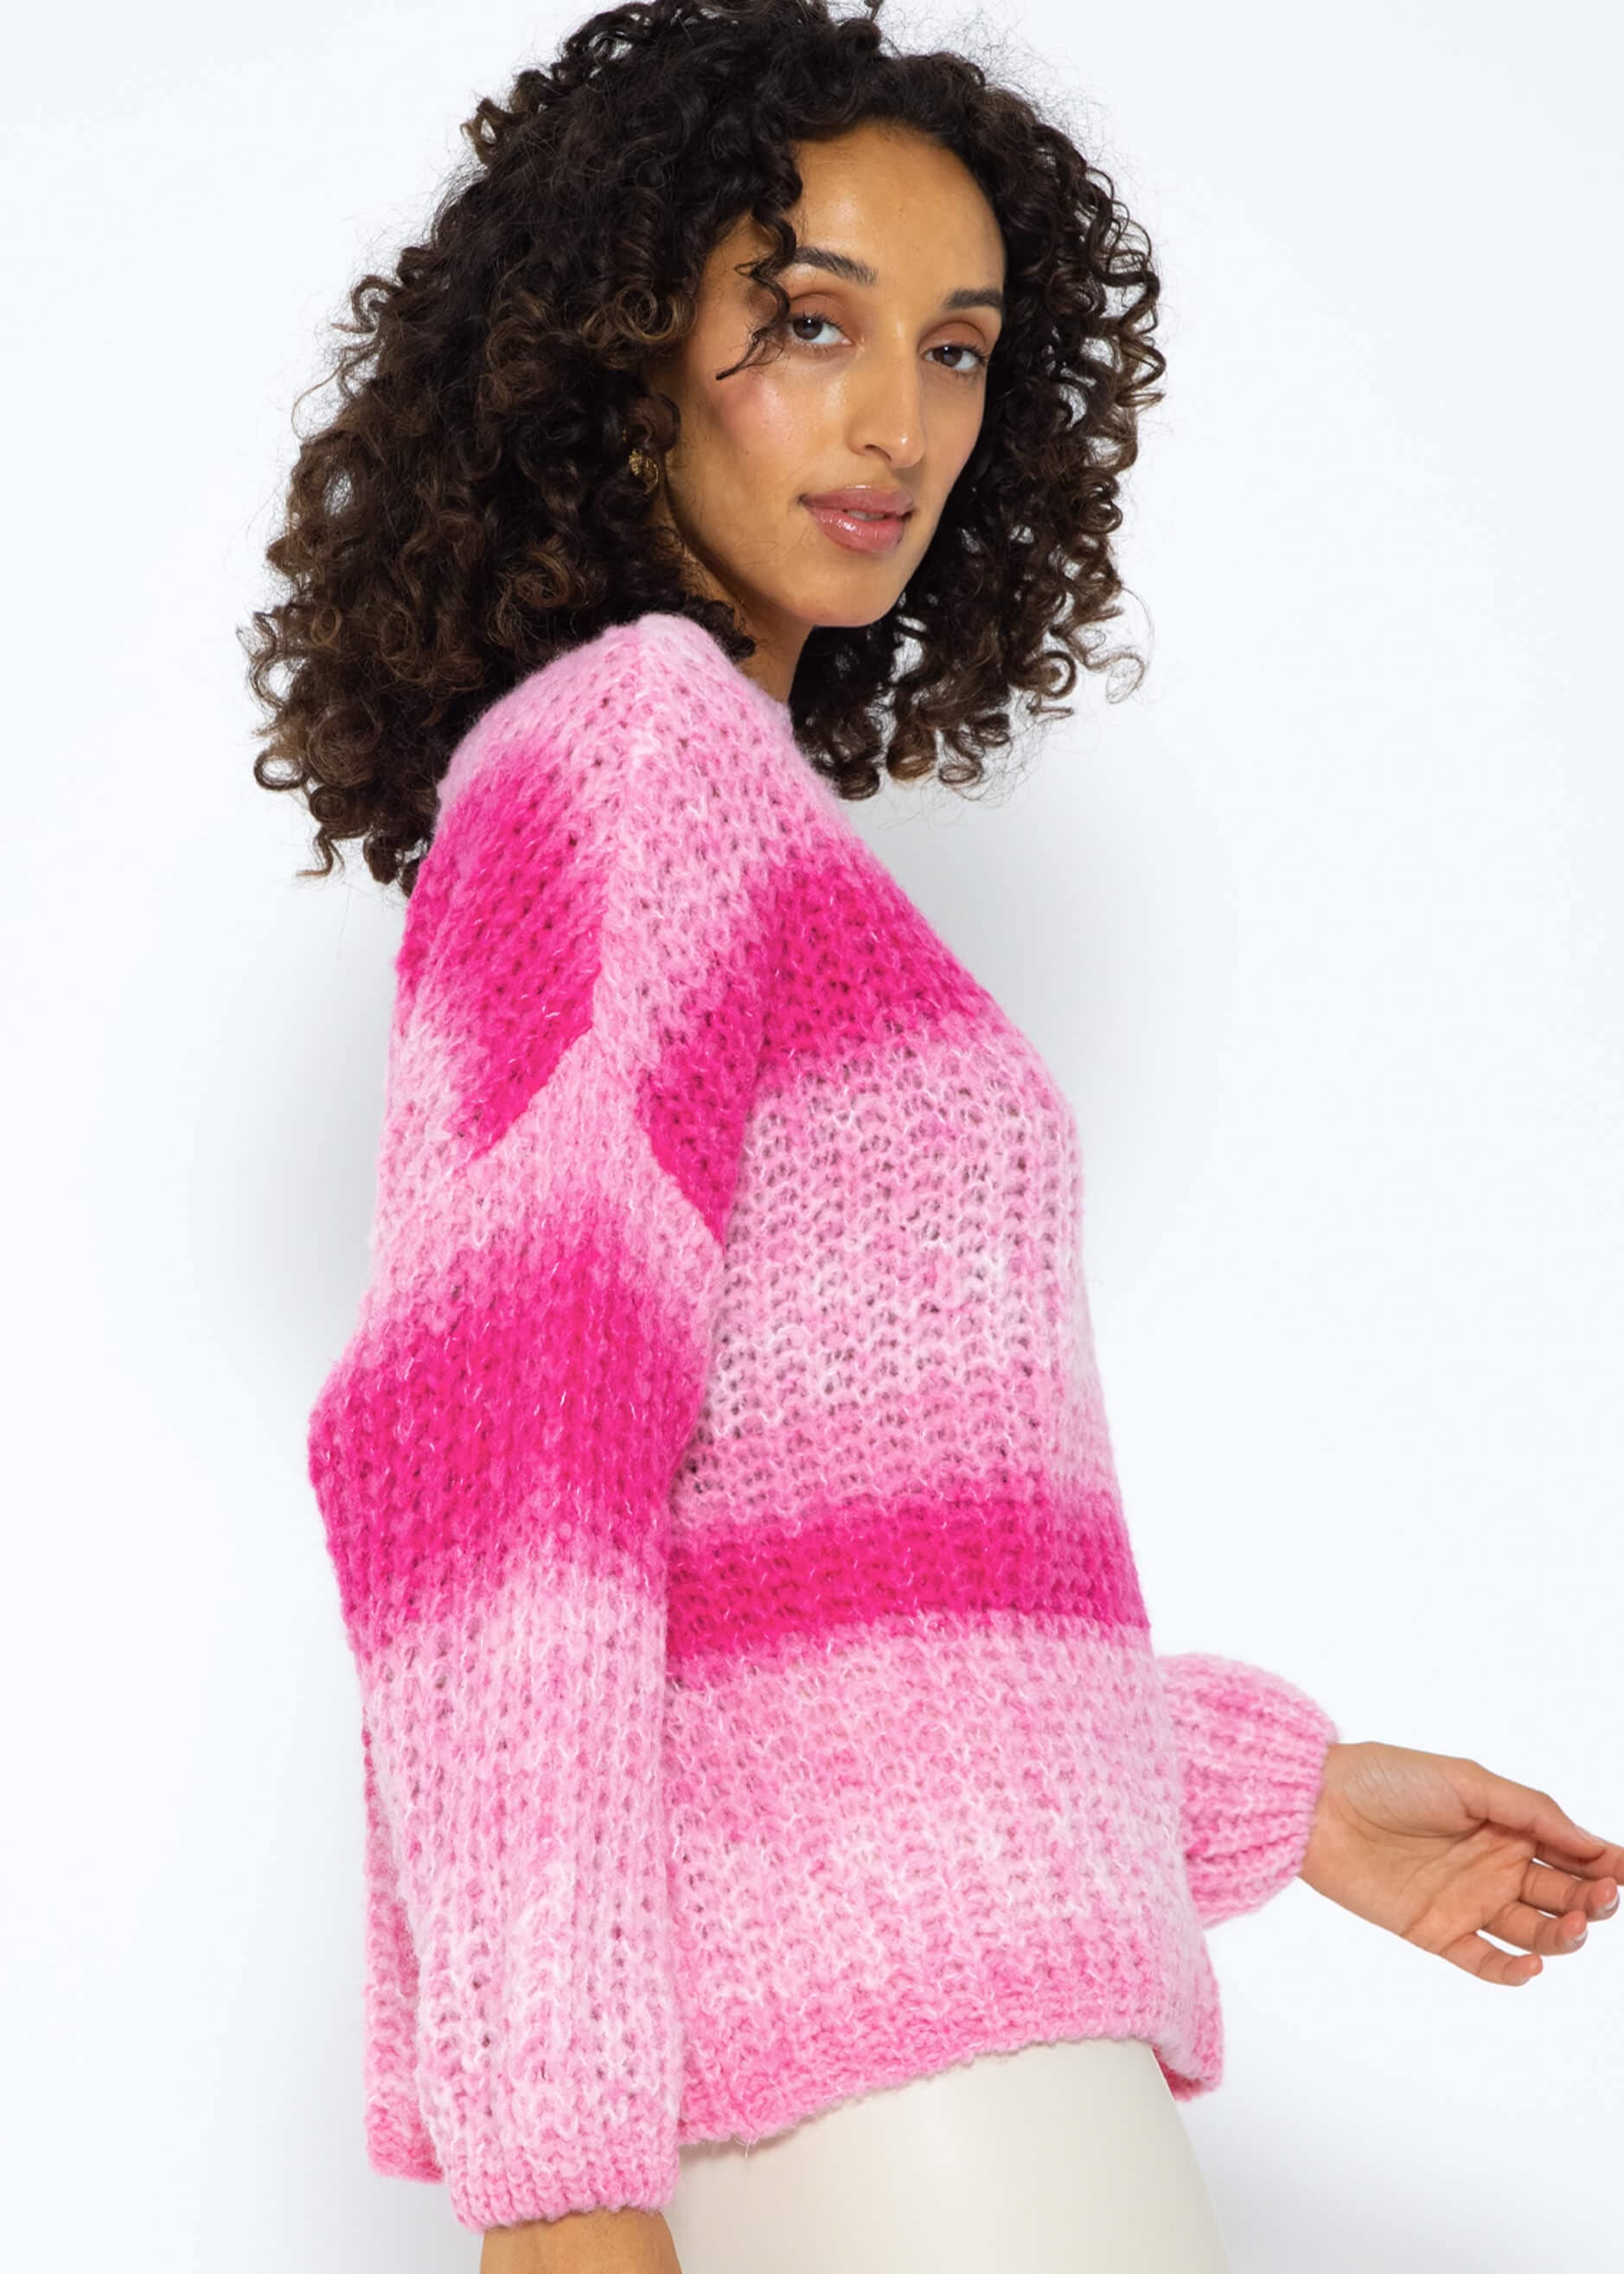 | SASSYCLASSY | | mit Pullover Farbverlauf Strickpullover - rosa Bekleidung